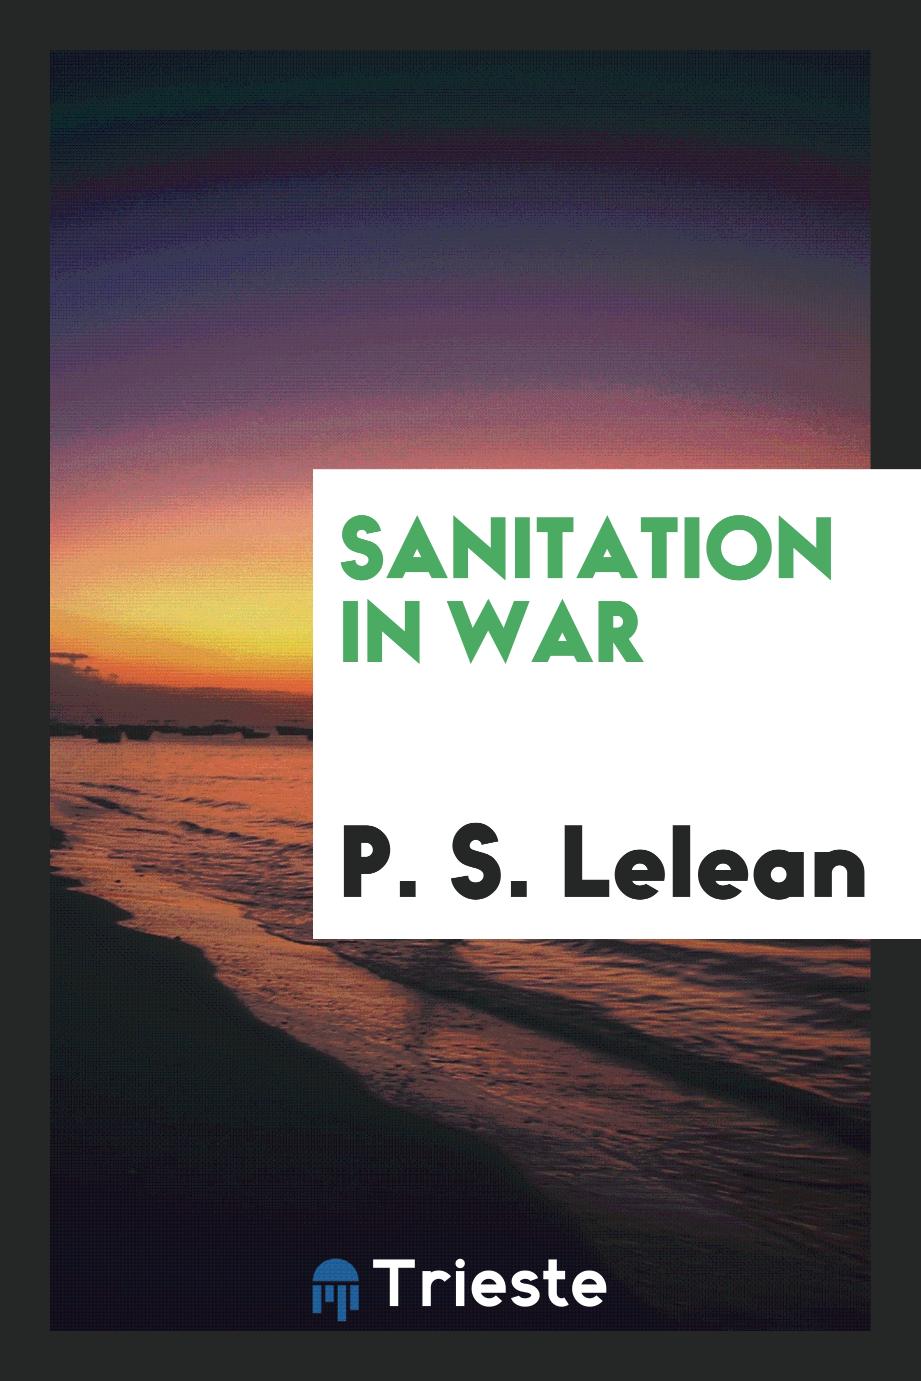 Sanitation in war